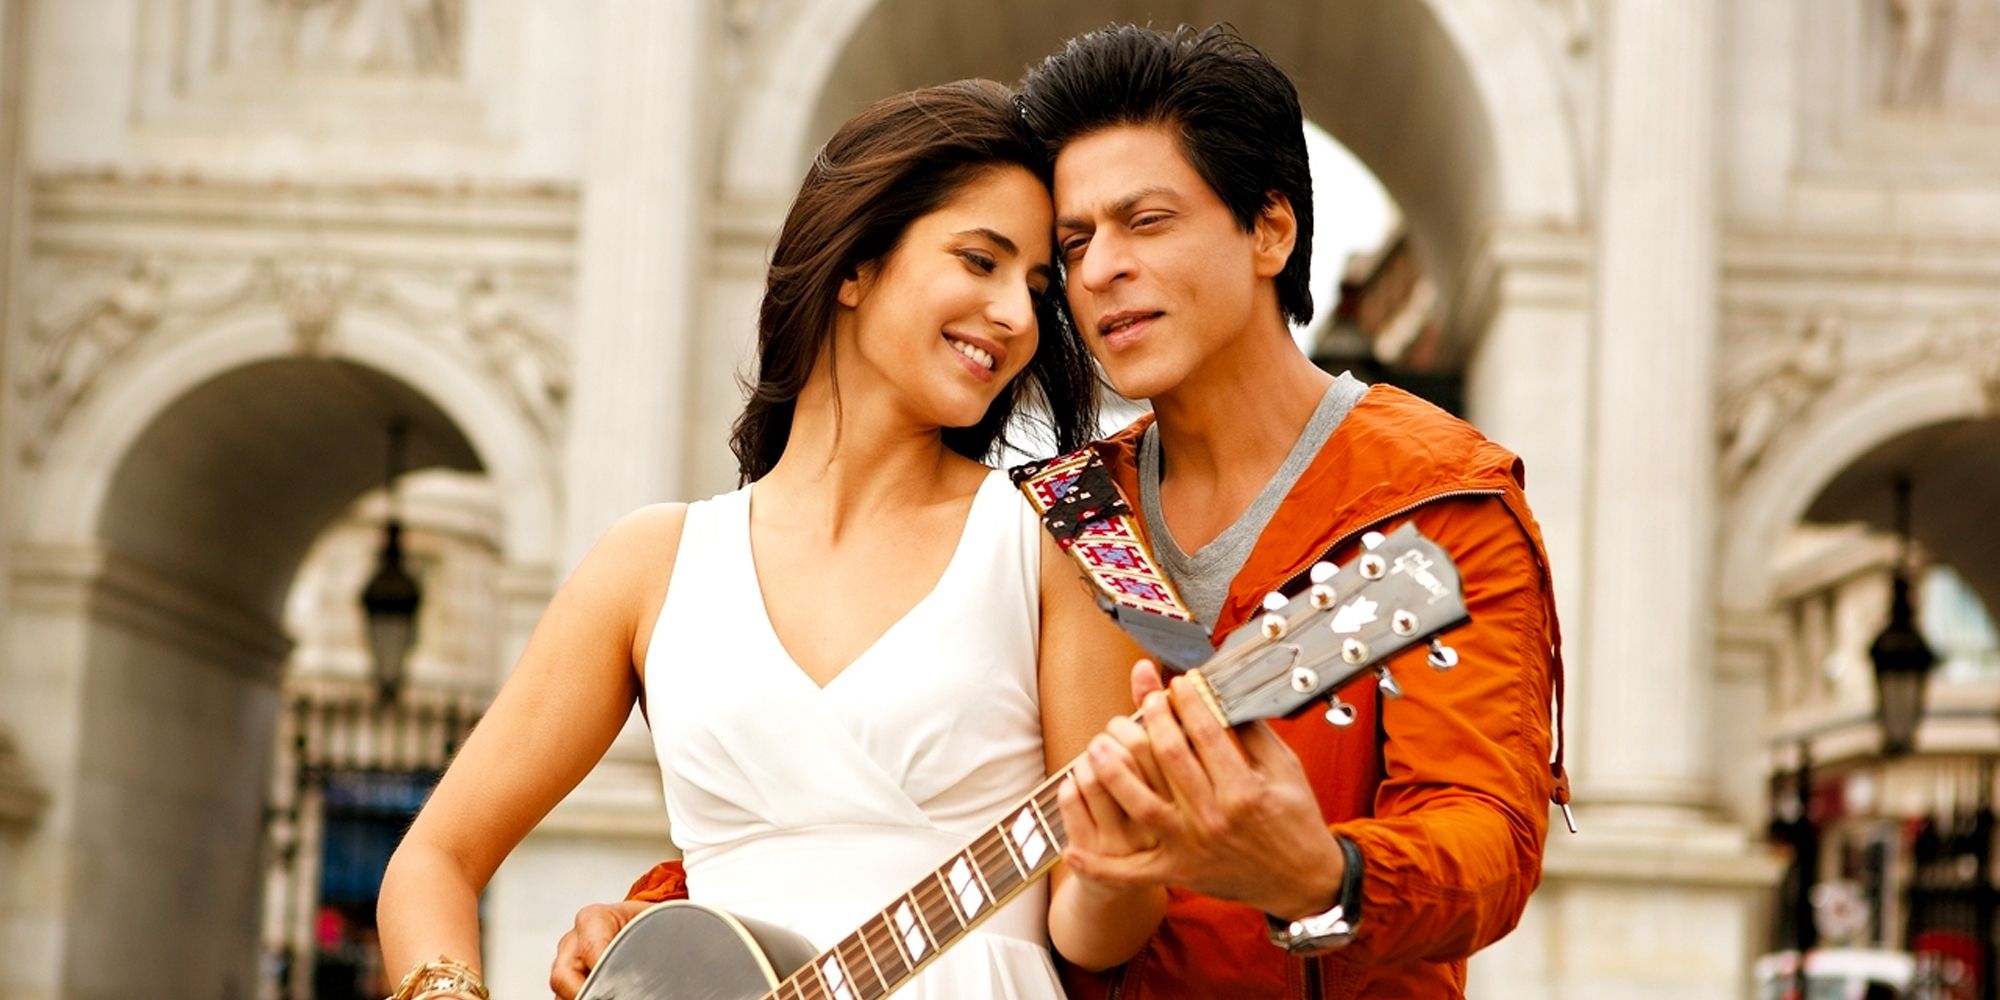 Shah Rukh Khan playing guitar with a woman in Jab tak hai jaan